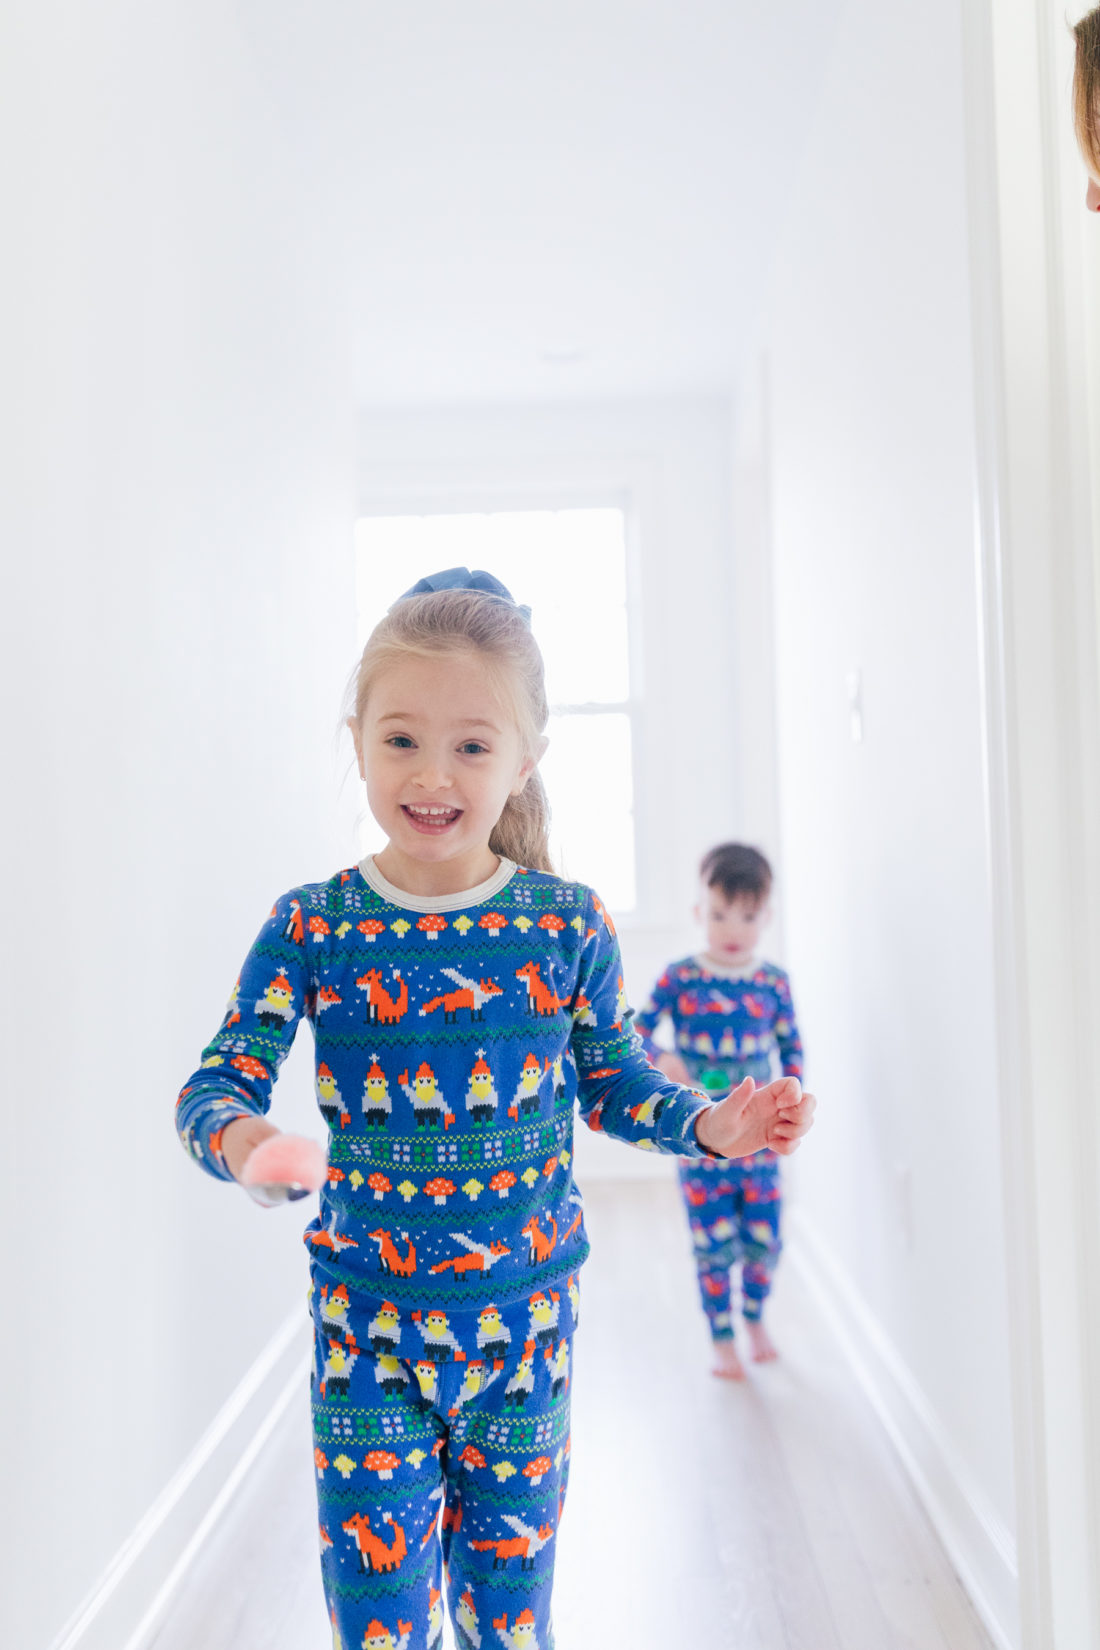 Eva Amurri Martino's children Major and Marlowe wears printed pajamas while entertaining themself at home